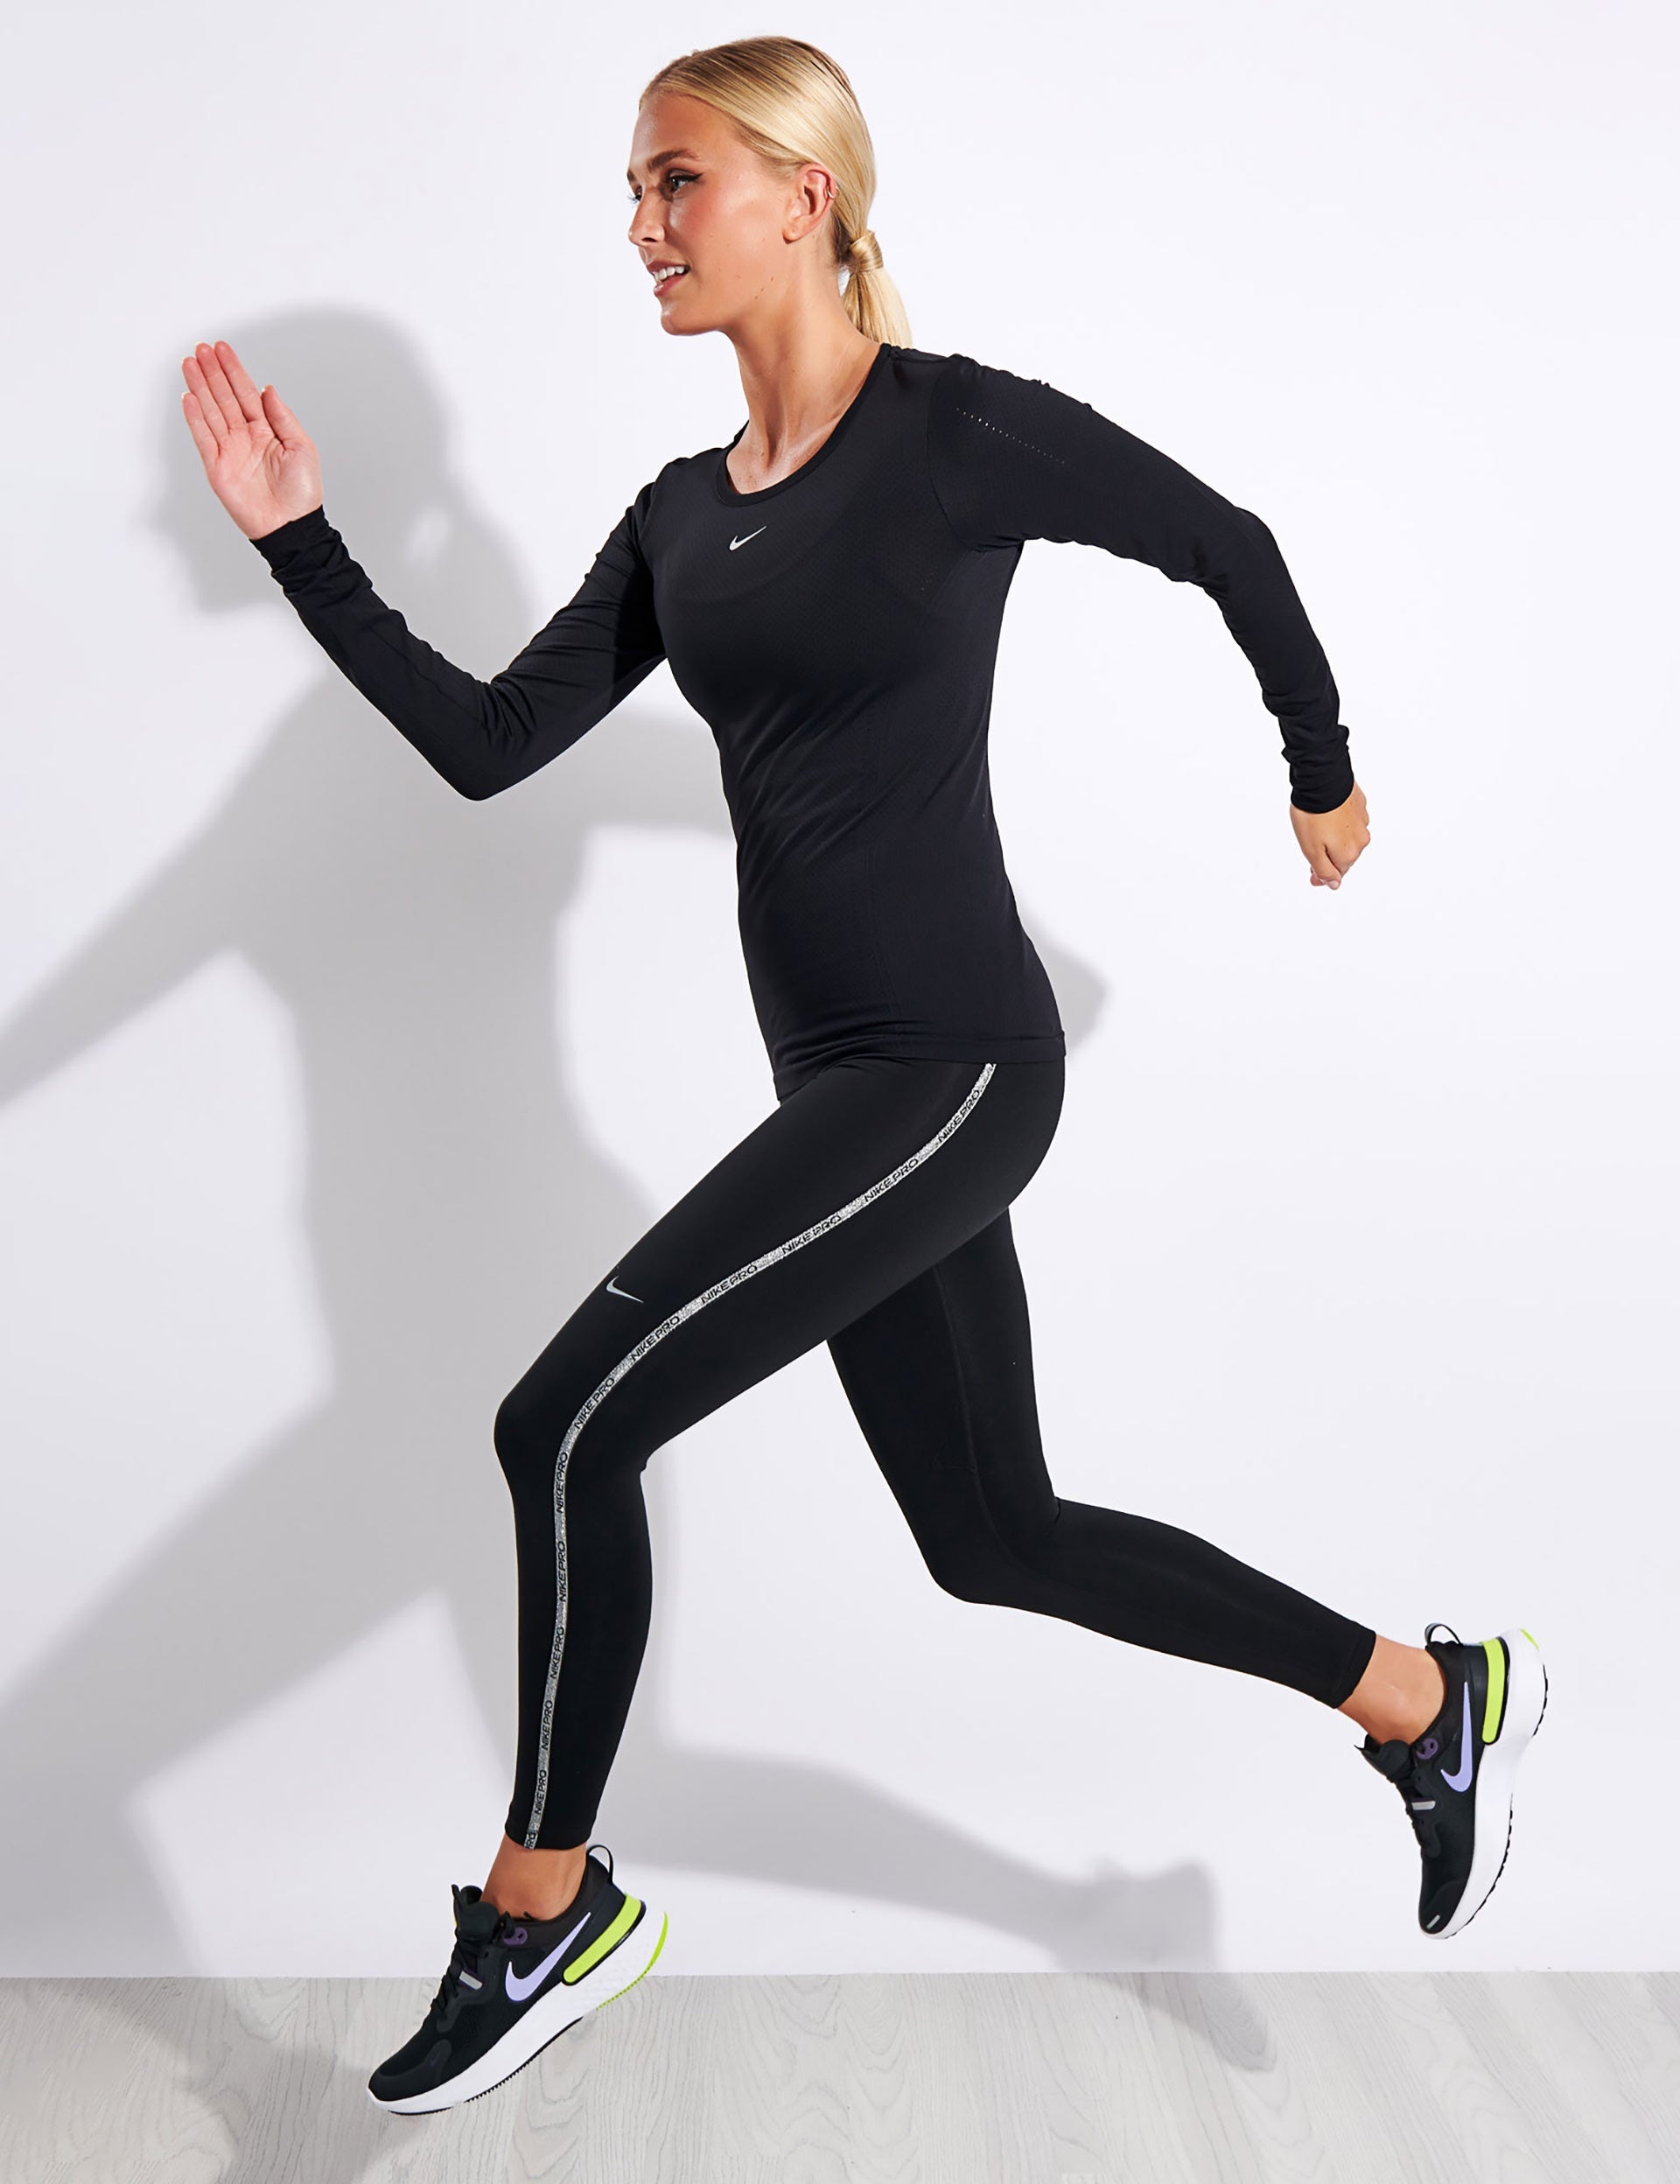 Nike Dri-FIT ADV Long Sleeve Top - Black/Reflective Silverimage2- The Sports Edit